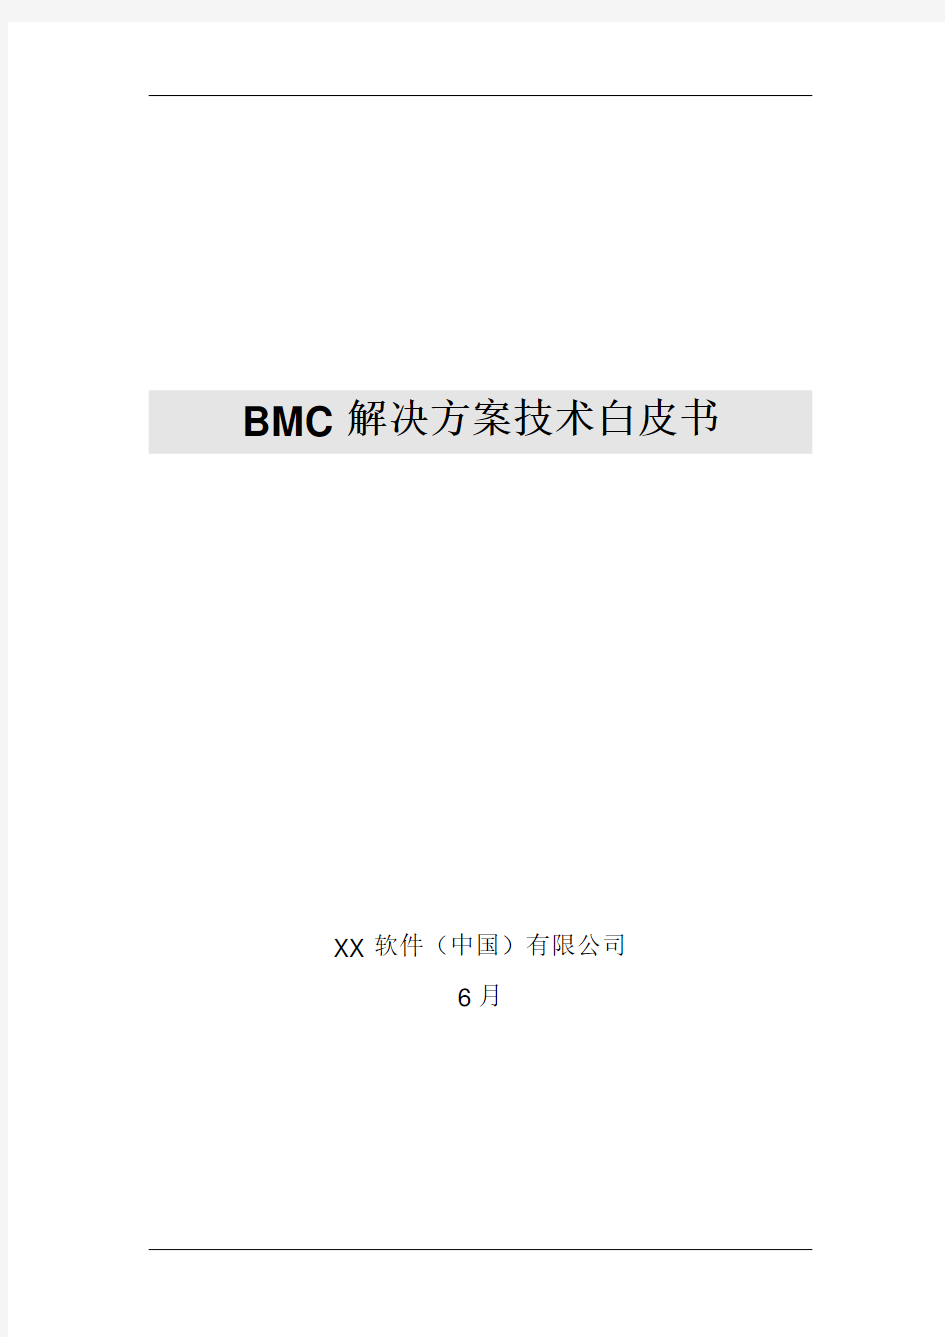 BMC解决方案技术白皮书